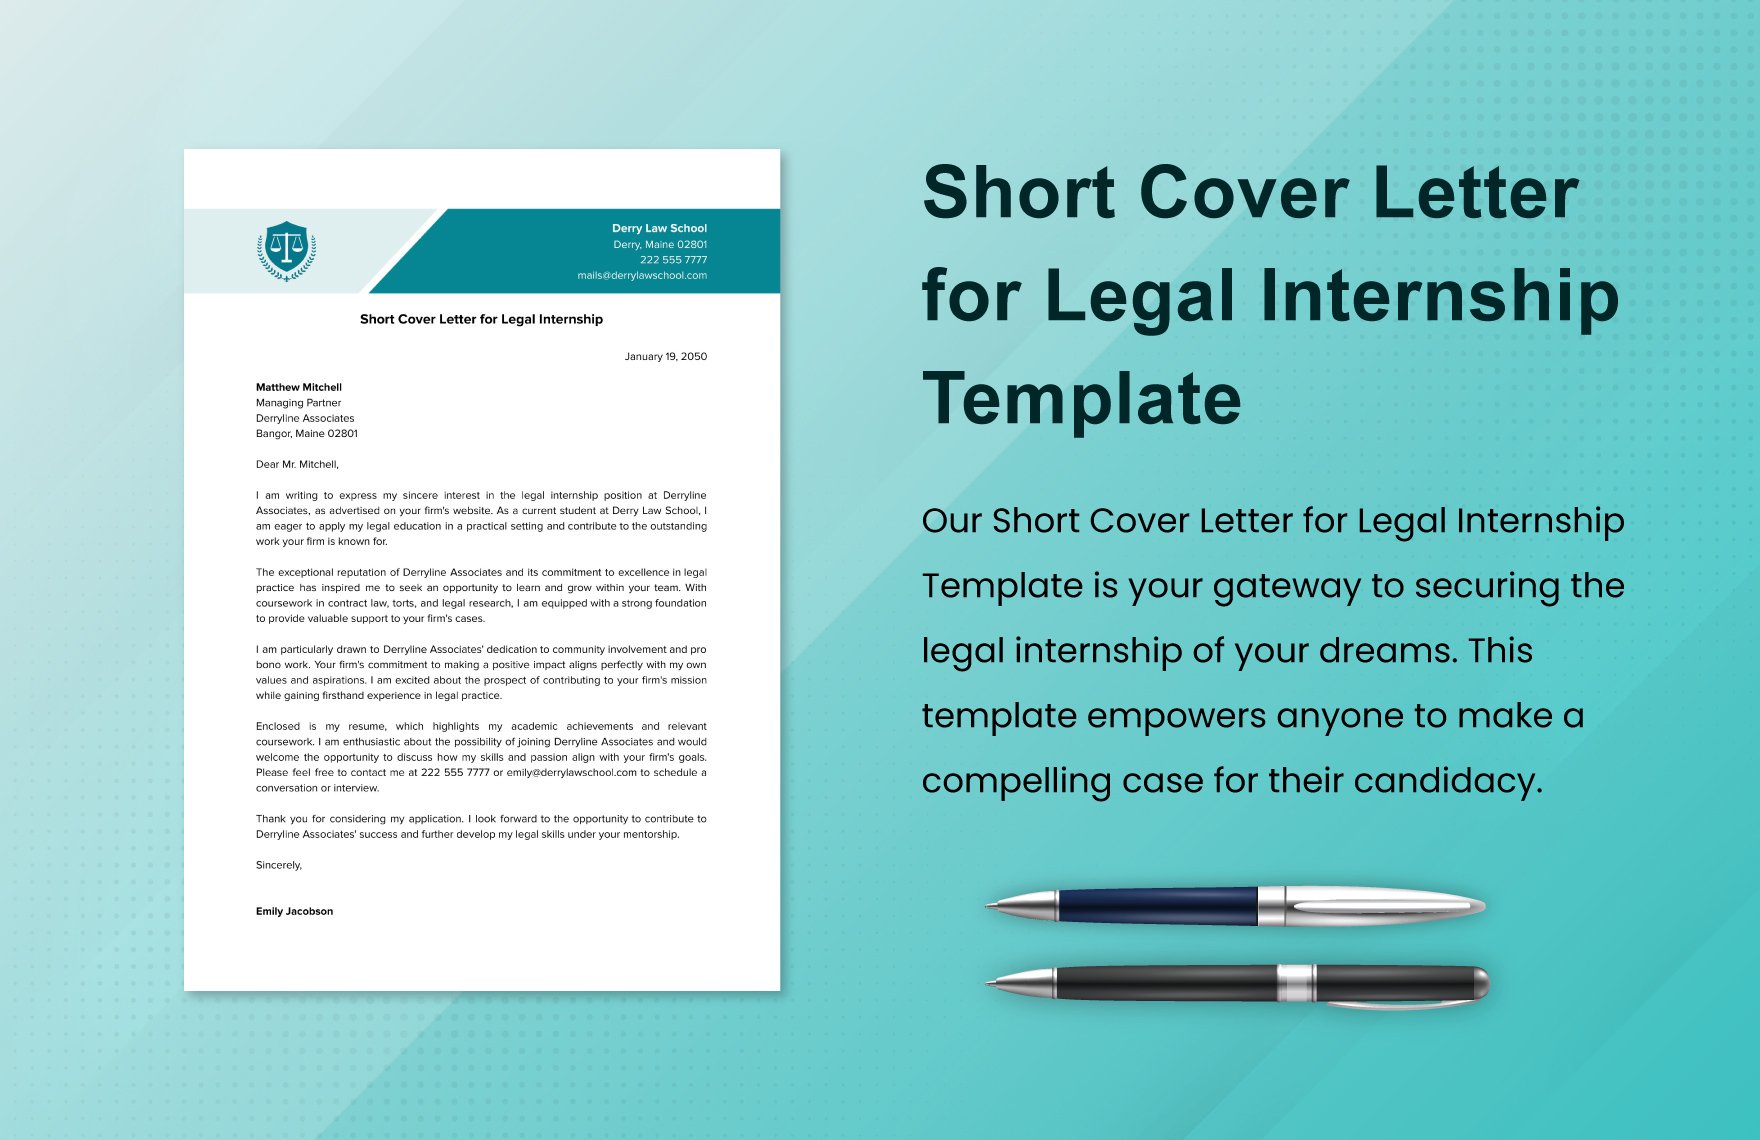 Short Cover Letter for Legal Internship Template